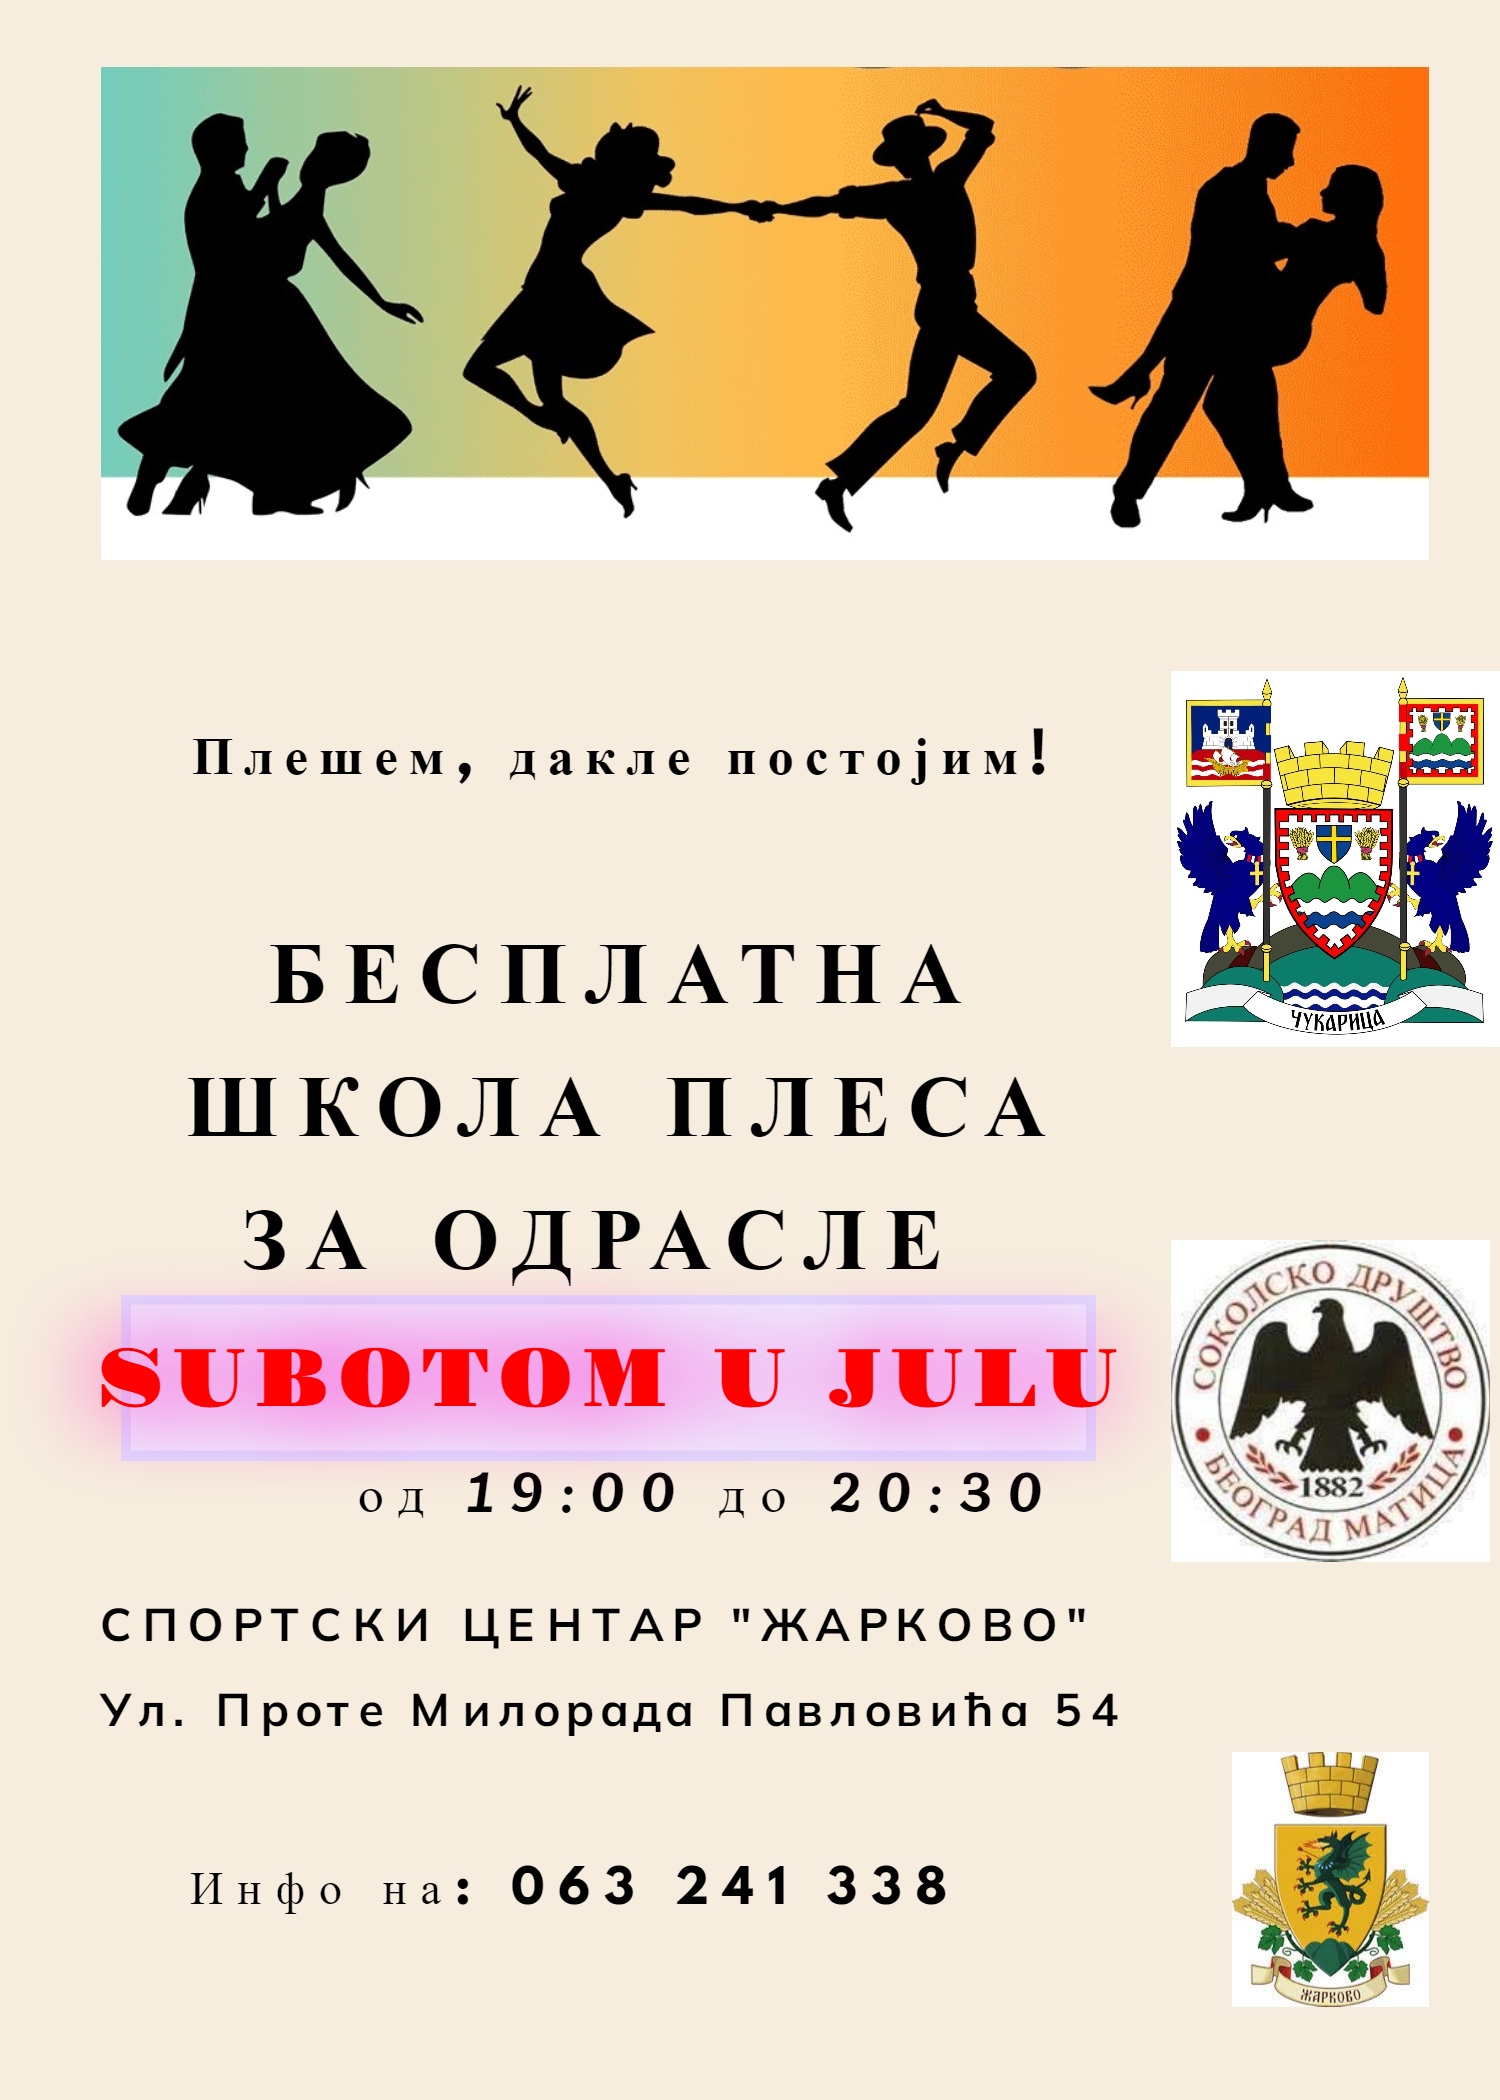 Бесплатни часови плеса у Спортском центру „Жарково“  